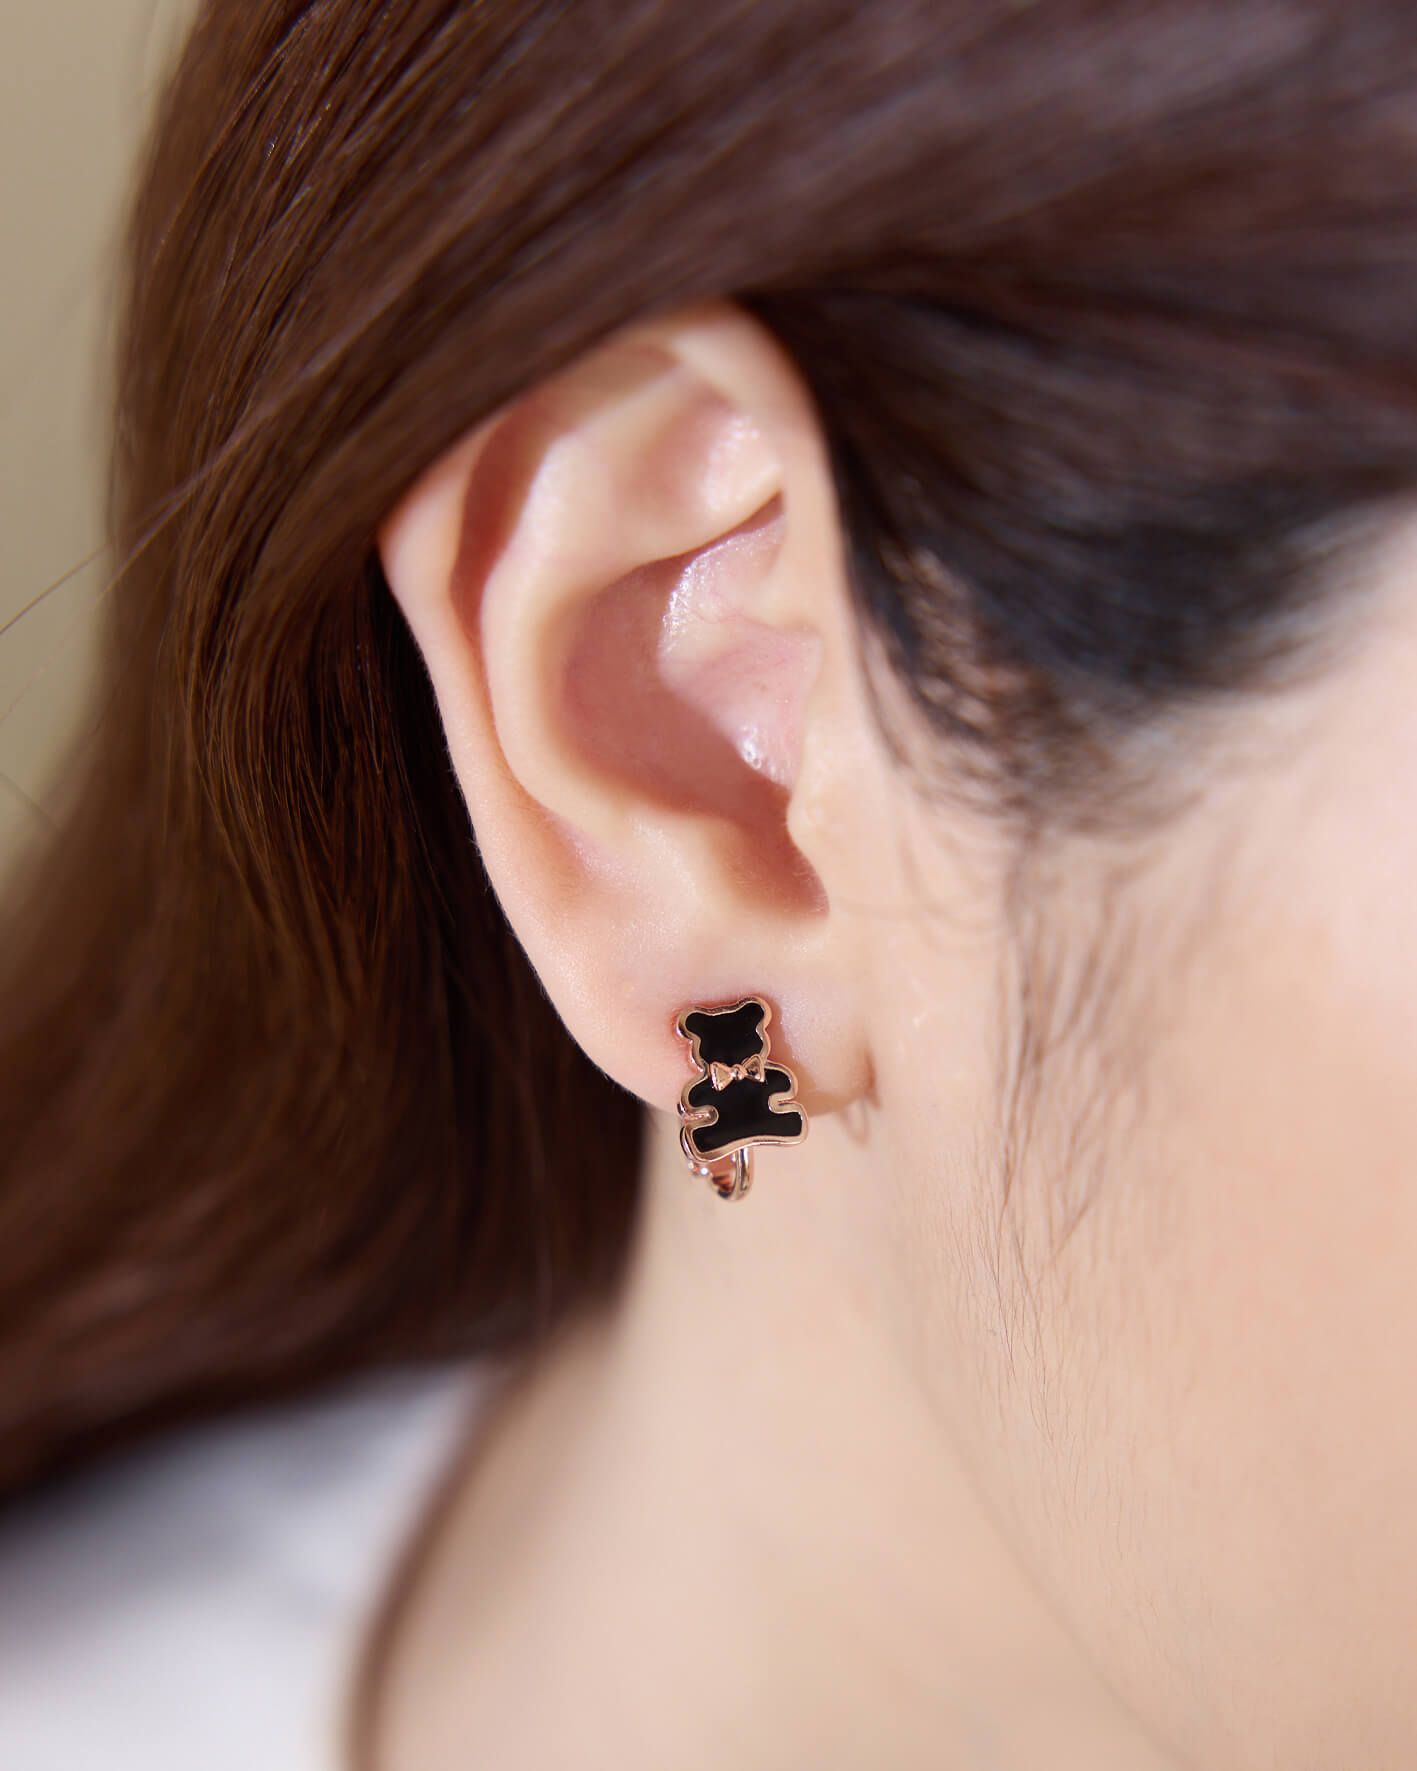 Eco安珂,韓國飾品,韓國耳環,韓國耳骨夾,垂墜耳環,螺旋夾耳環,可調式耳夾耳環,螺旋夾垂墜耳環,熊耳環